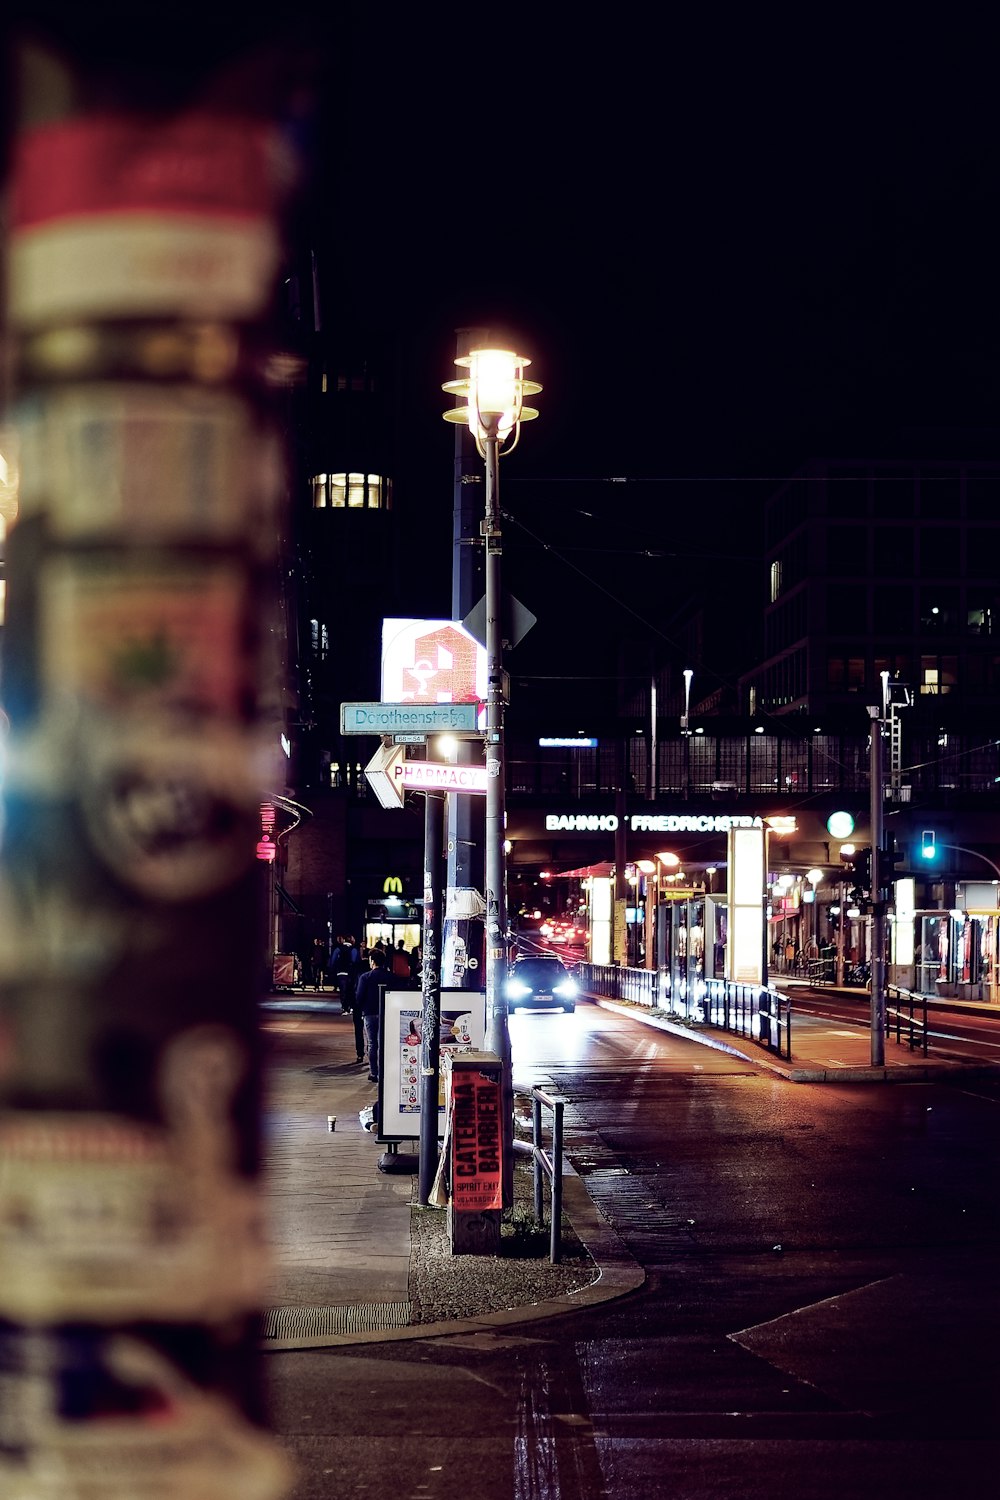 a street corner at night